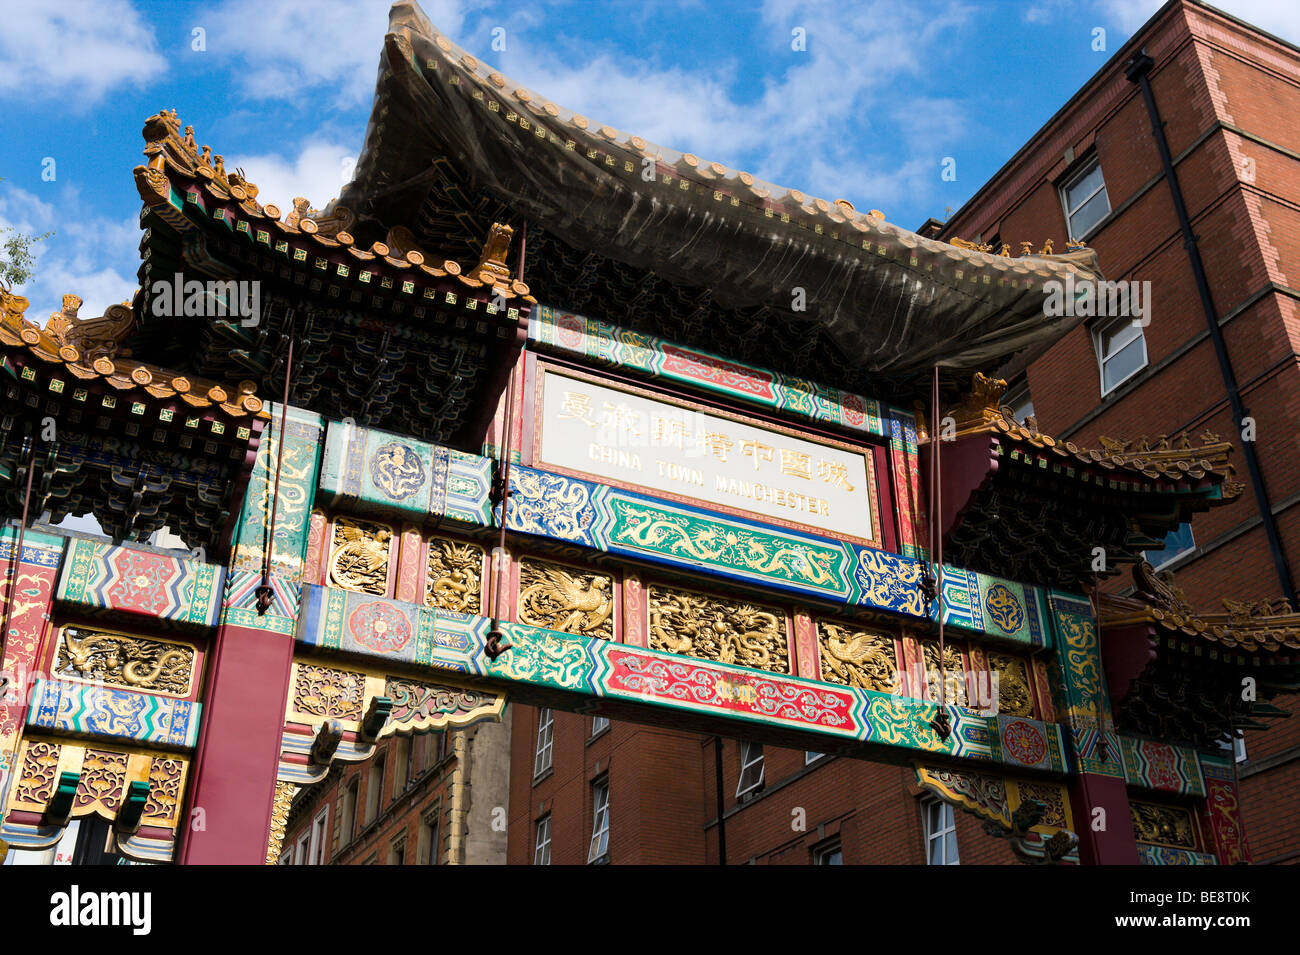 Chinese Gate sur Faulkner Street dans le quartier chinois, Manchester, Angleterre Banque D'Images